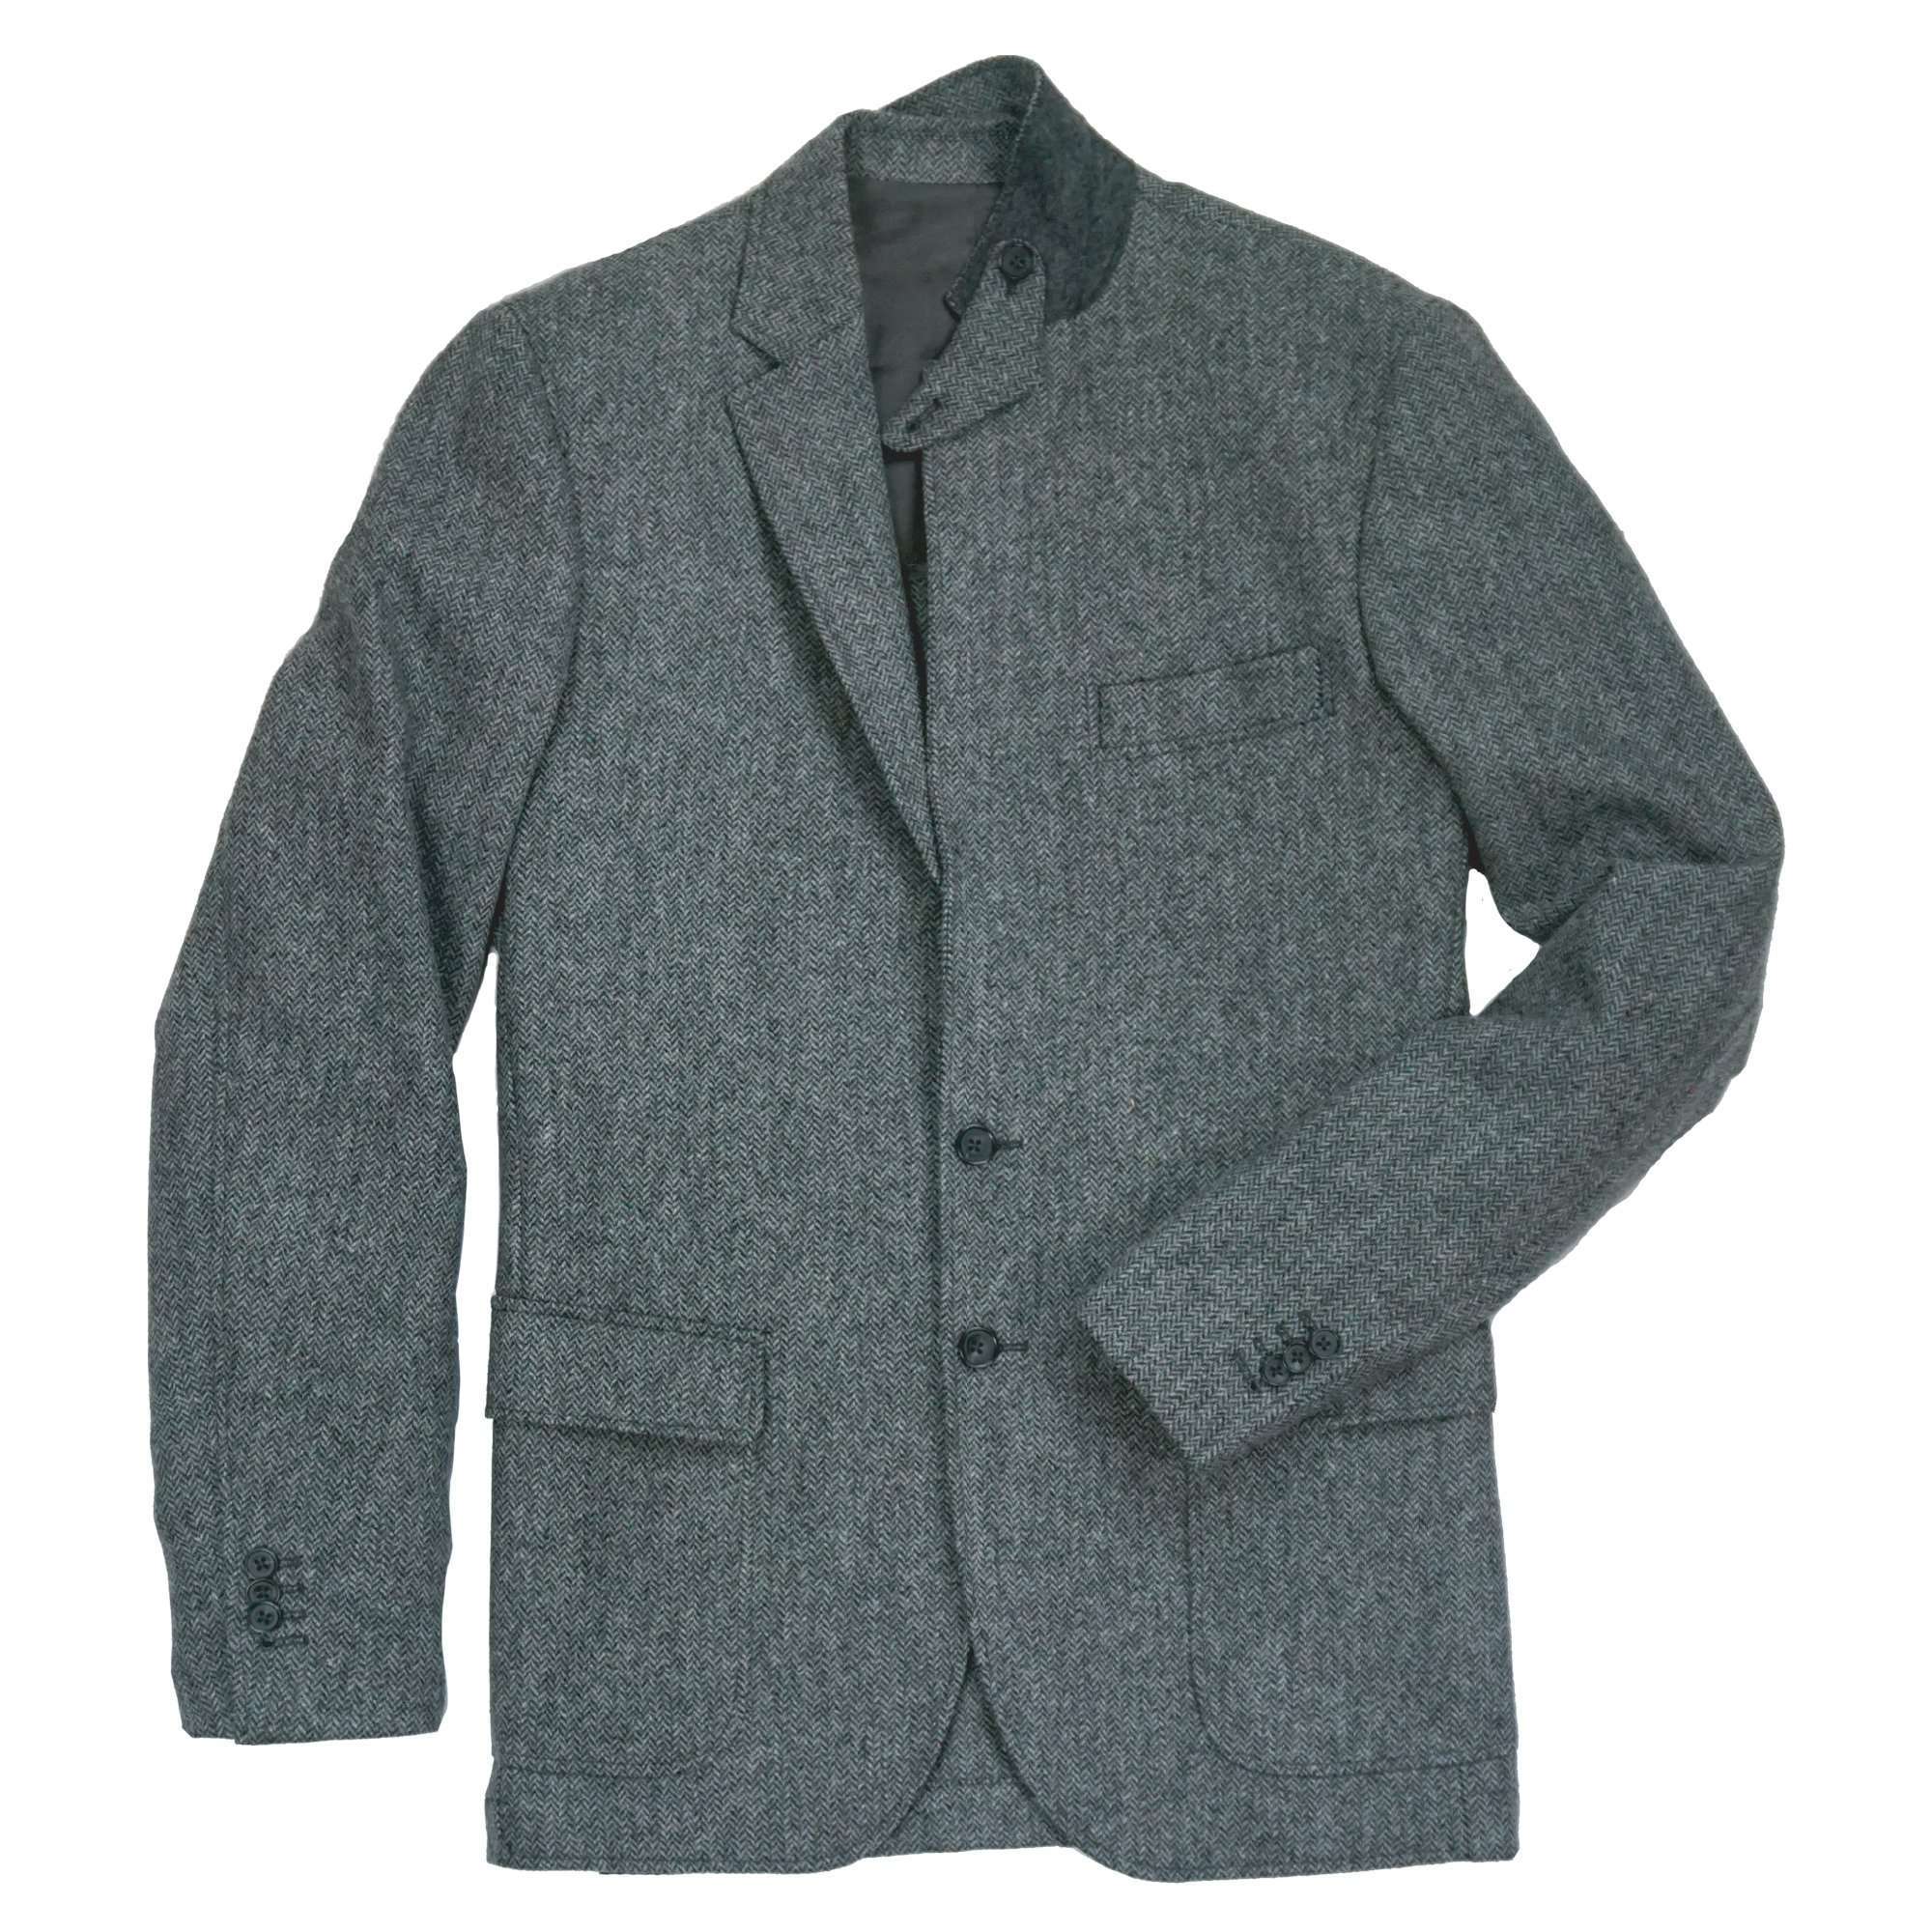 Southern Proper - Gentleman's Jacket: Fitzhugh